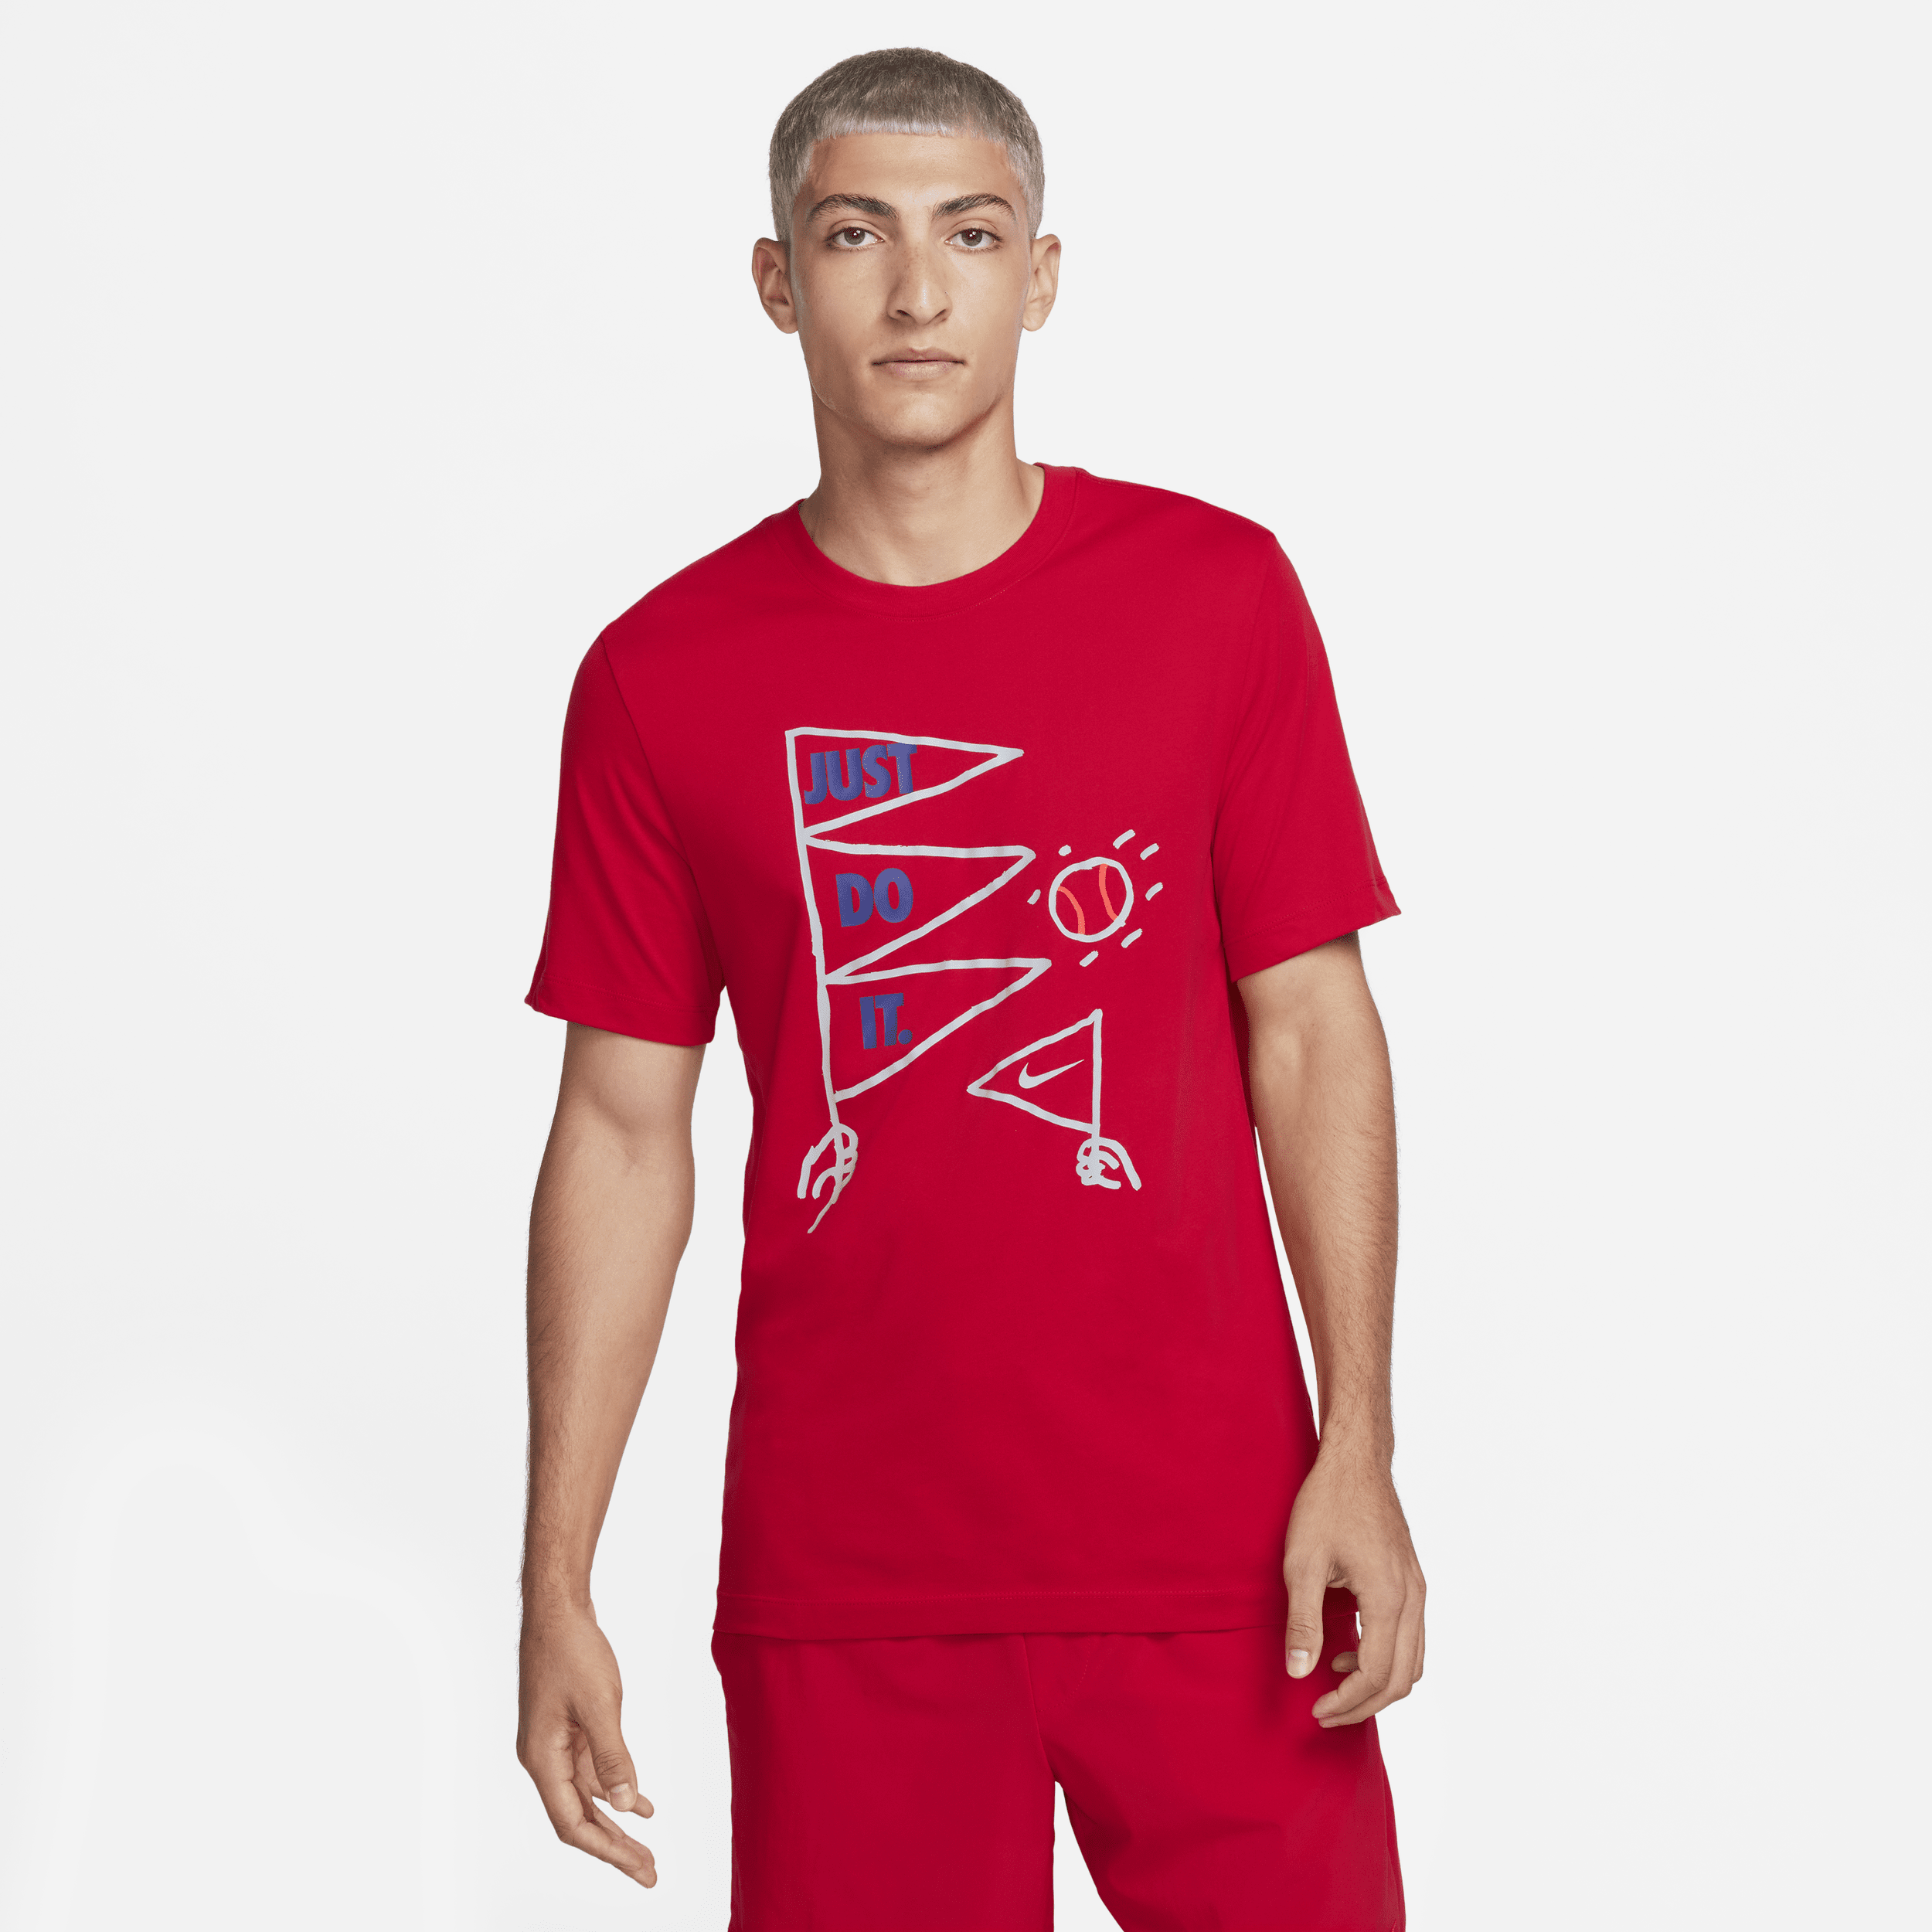 Nike Men's Dri-fit Baseball T-shirt In Red